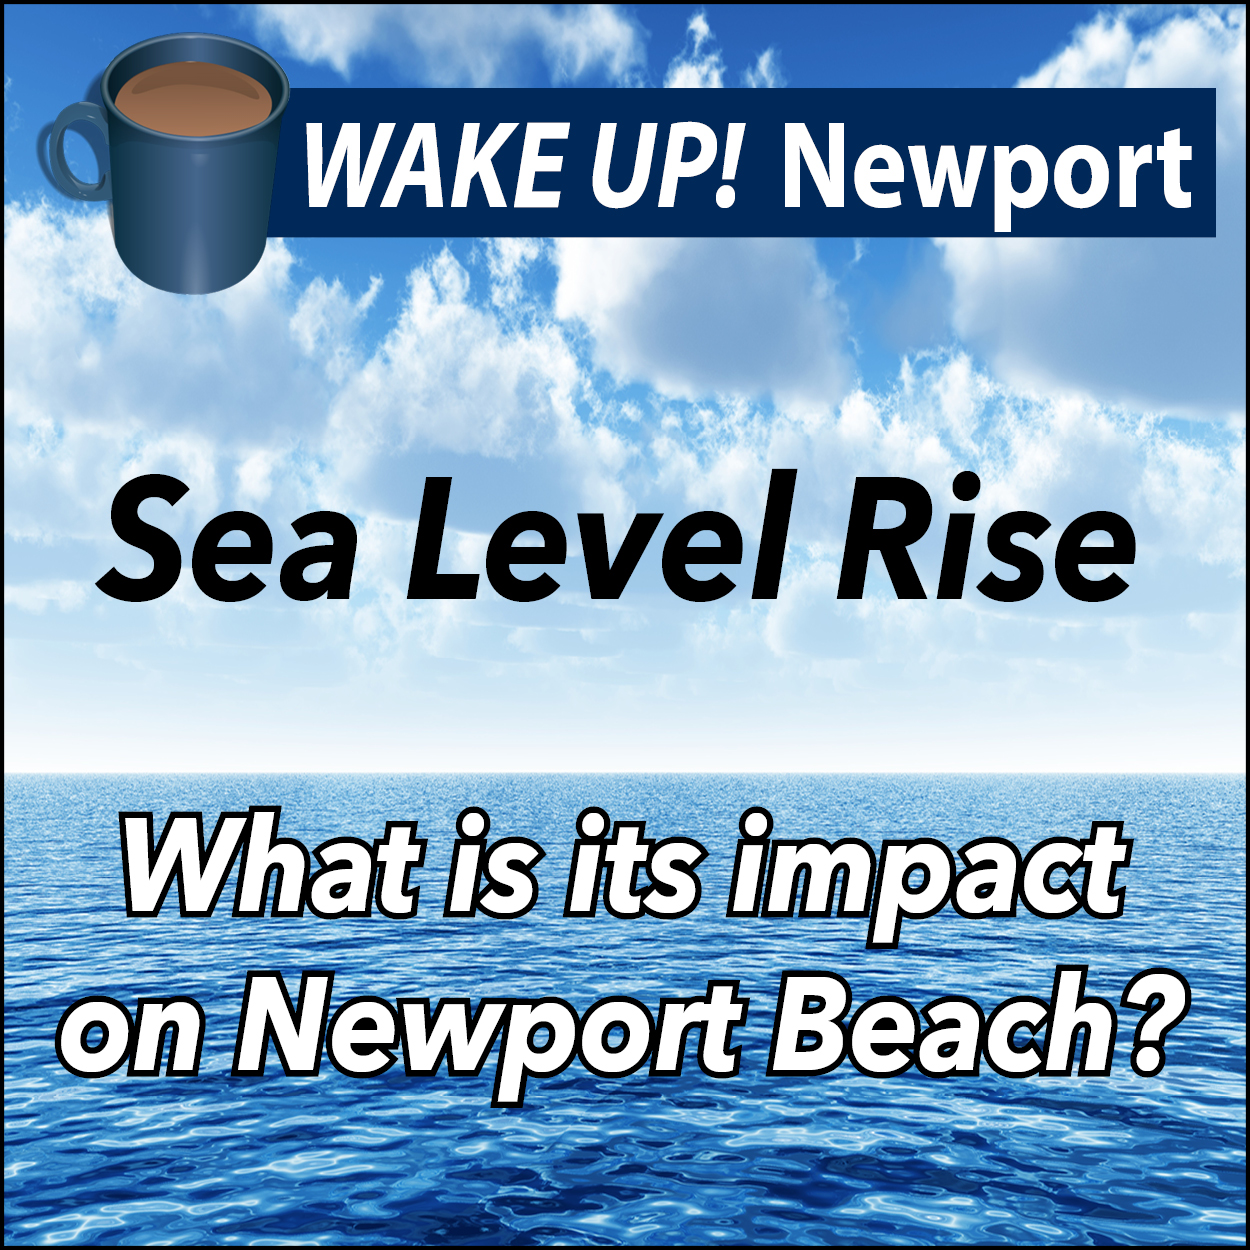 February WAKE UP! Newport - Sea Level Rising and its impact on Newport Beach